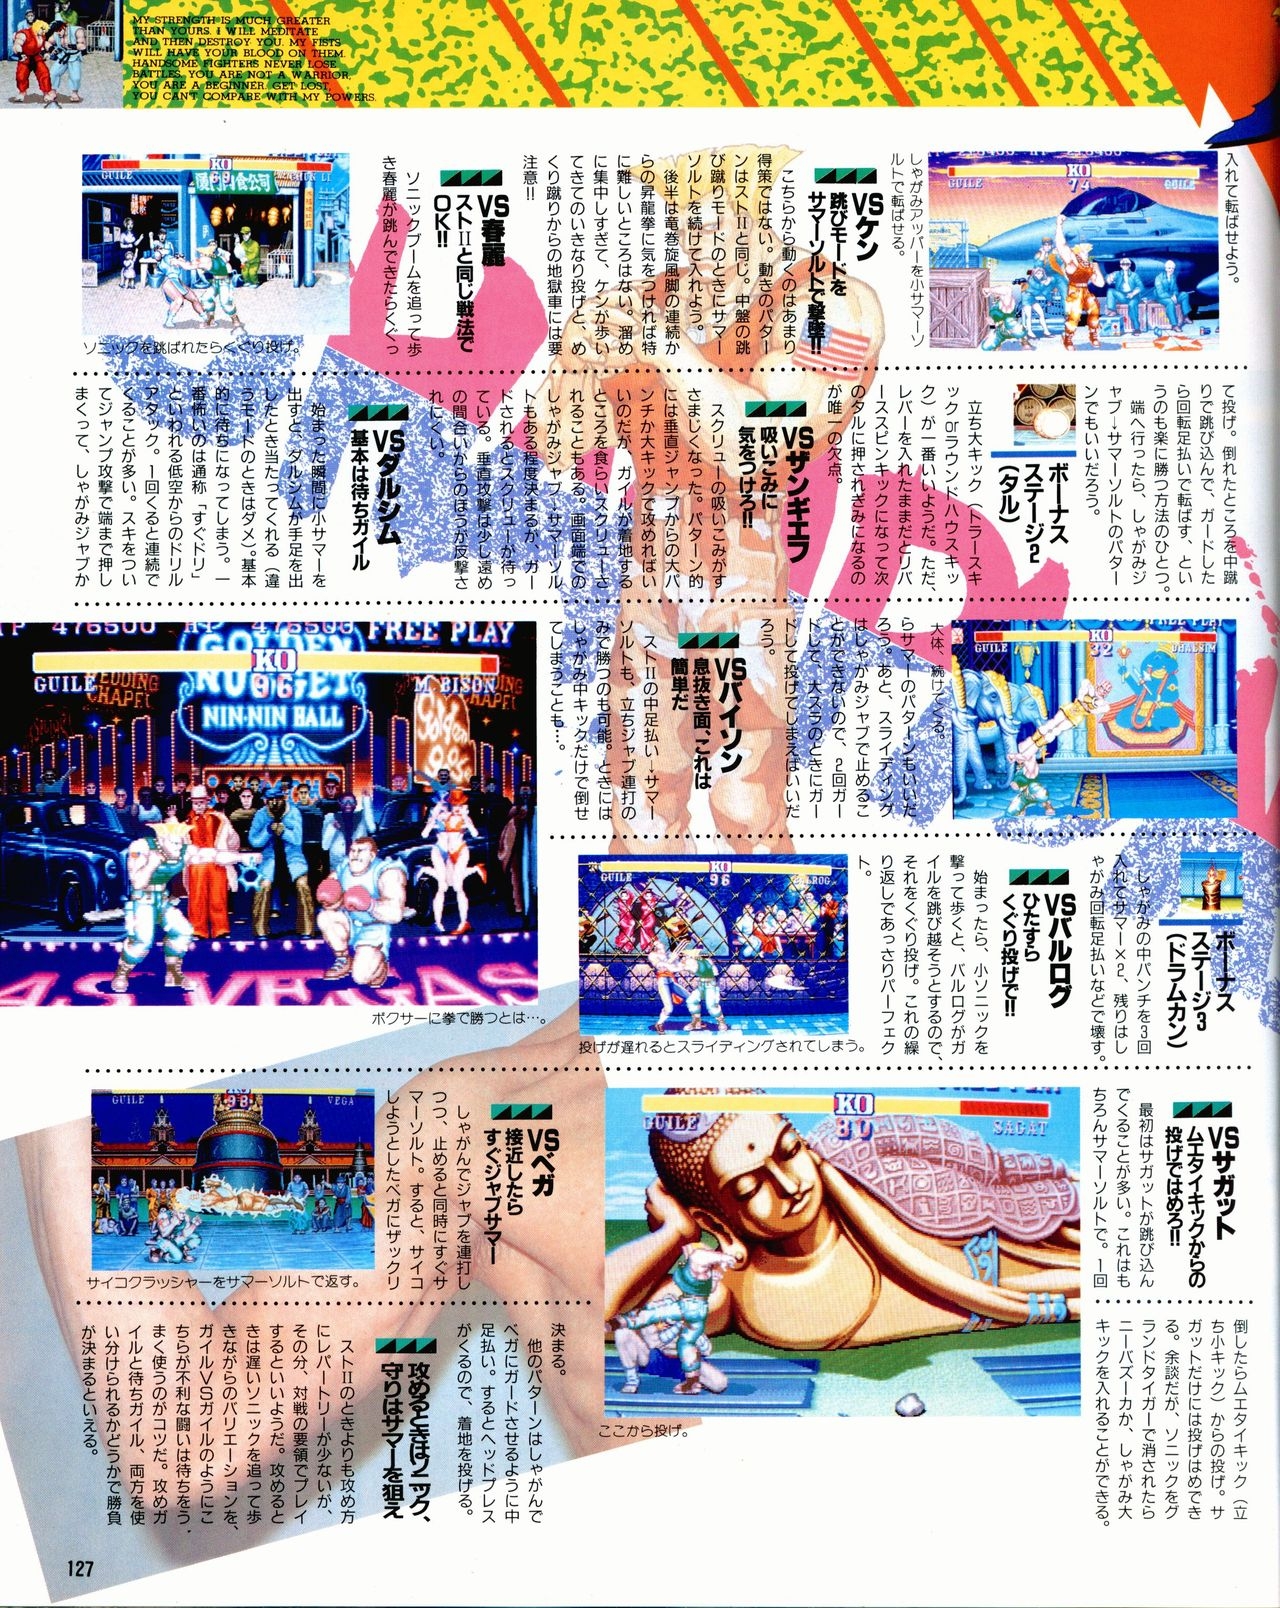 Street Fighter II Dash - Gamest special issue 77 128